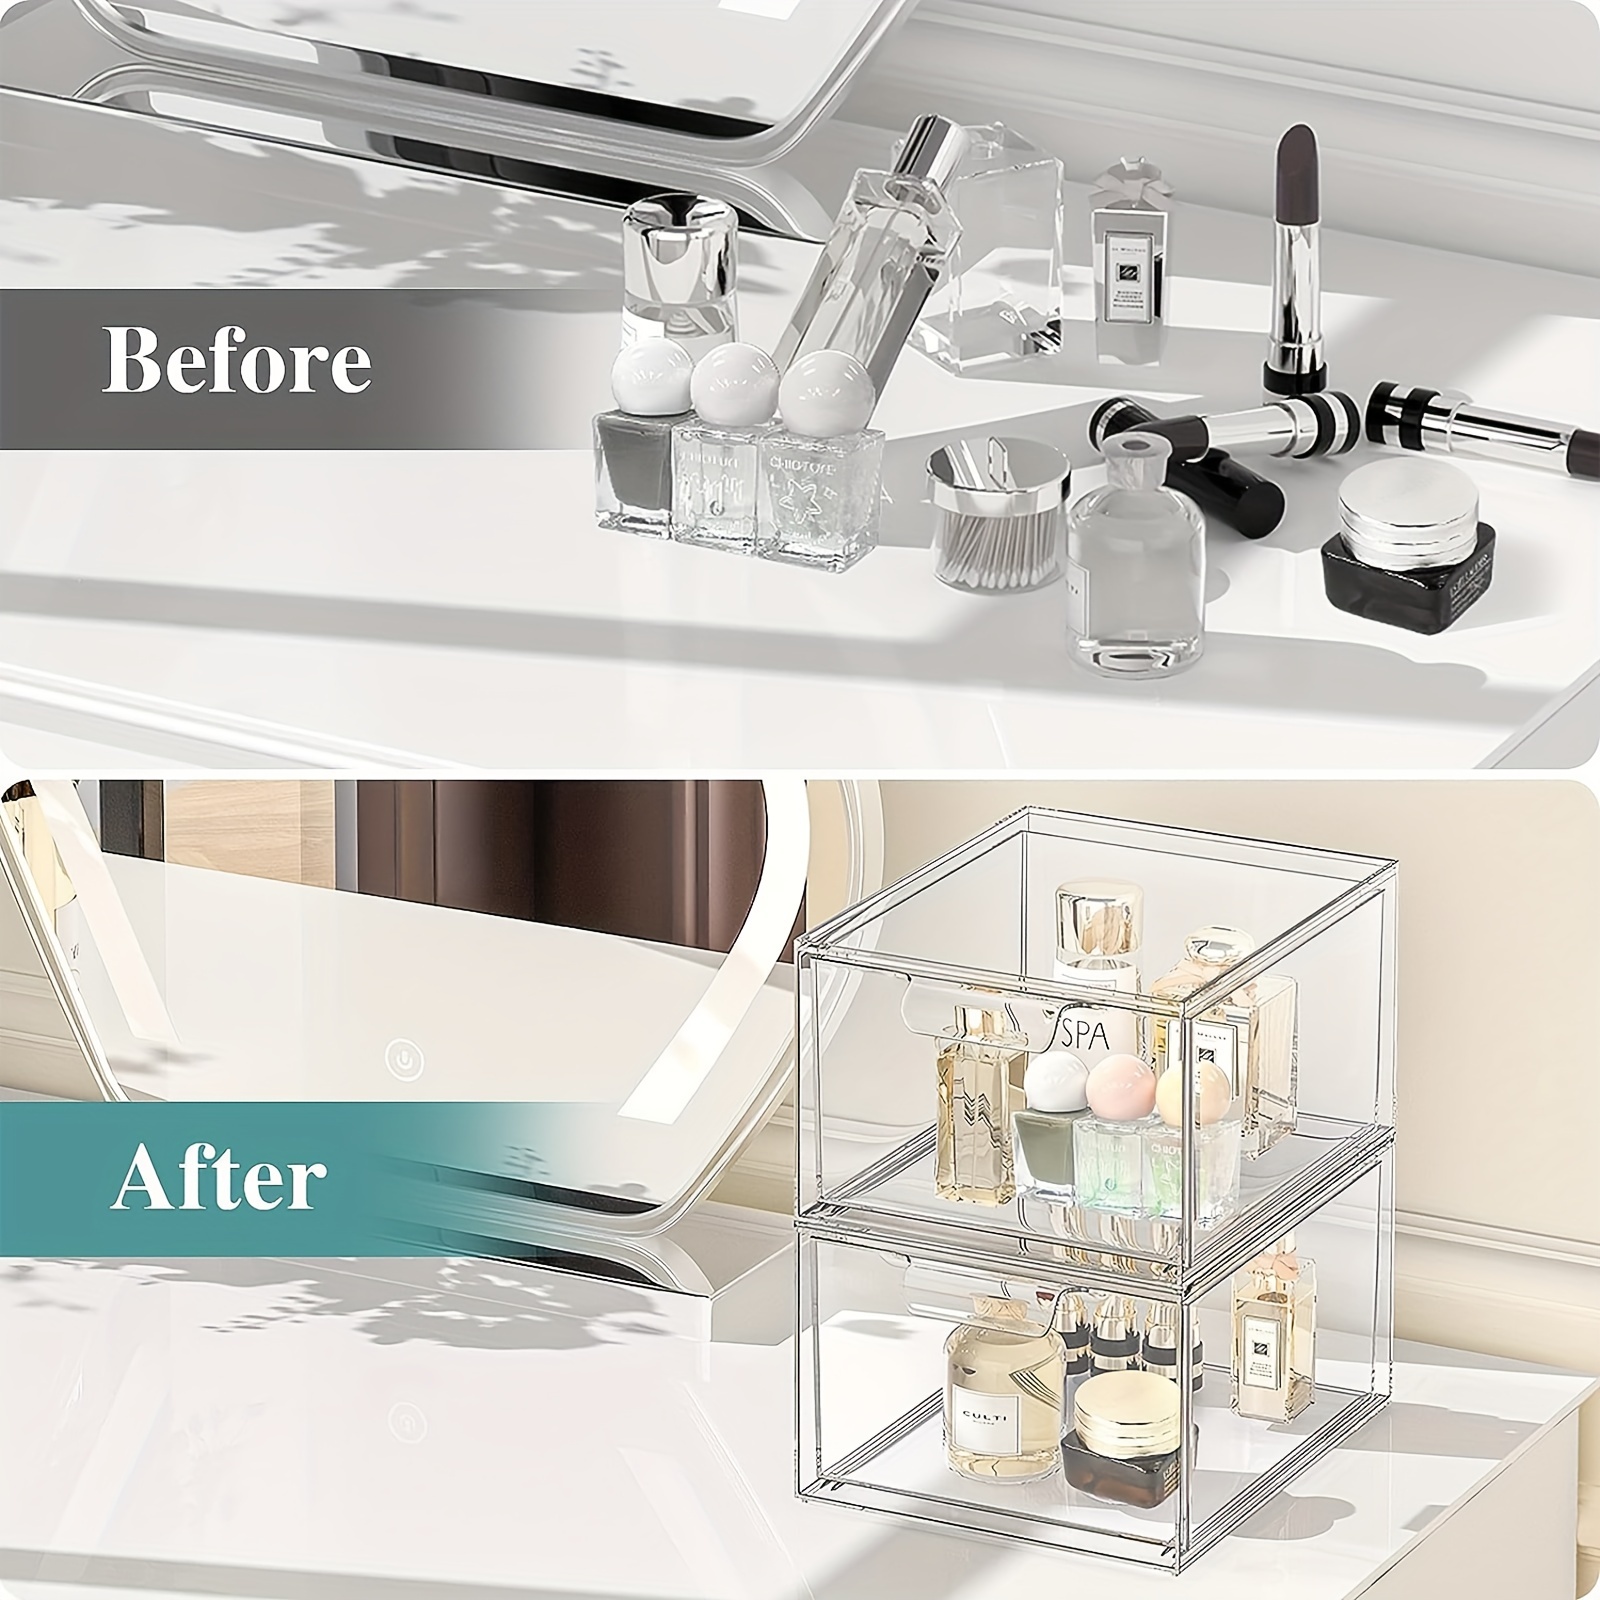 2PCS Stackable Makeup Organizer Storage Drawers, Clear Storage Bins for  Vanity, Undersink, Kitchen Cabinets, Pantry Organization and Storage